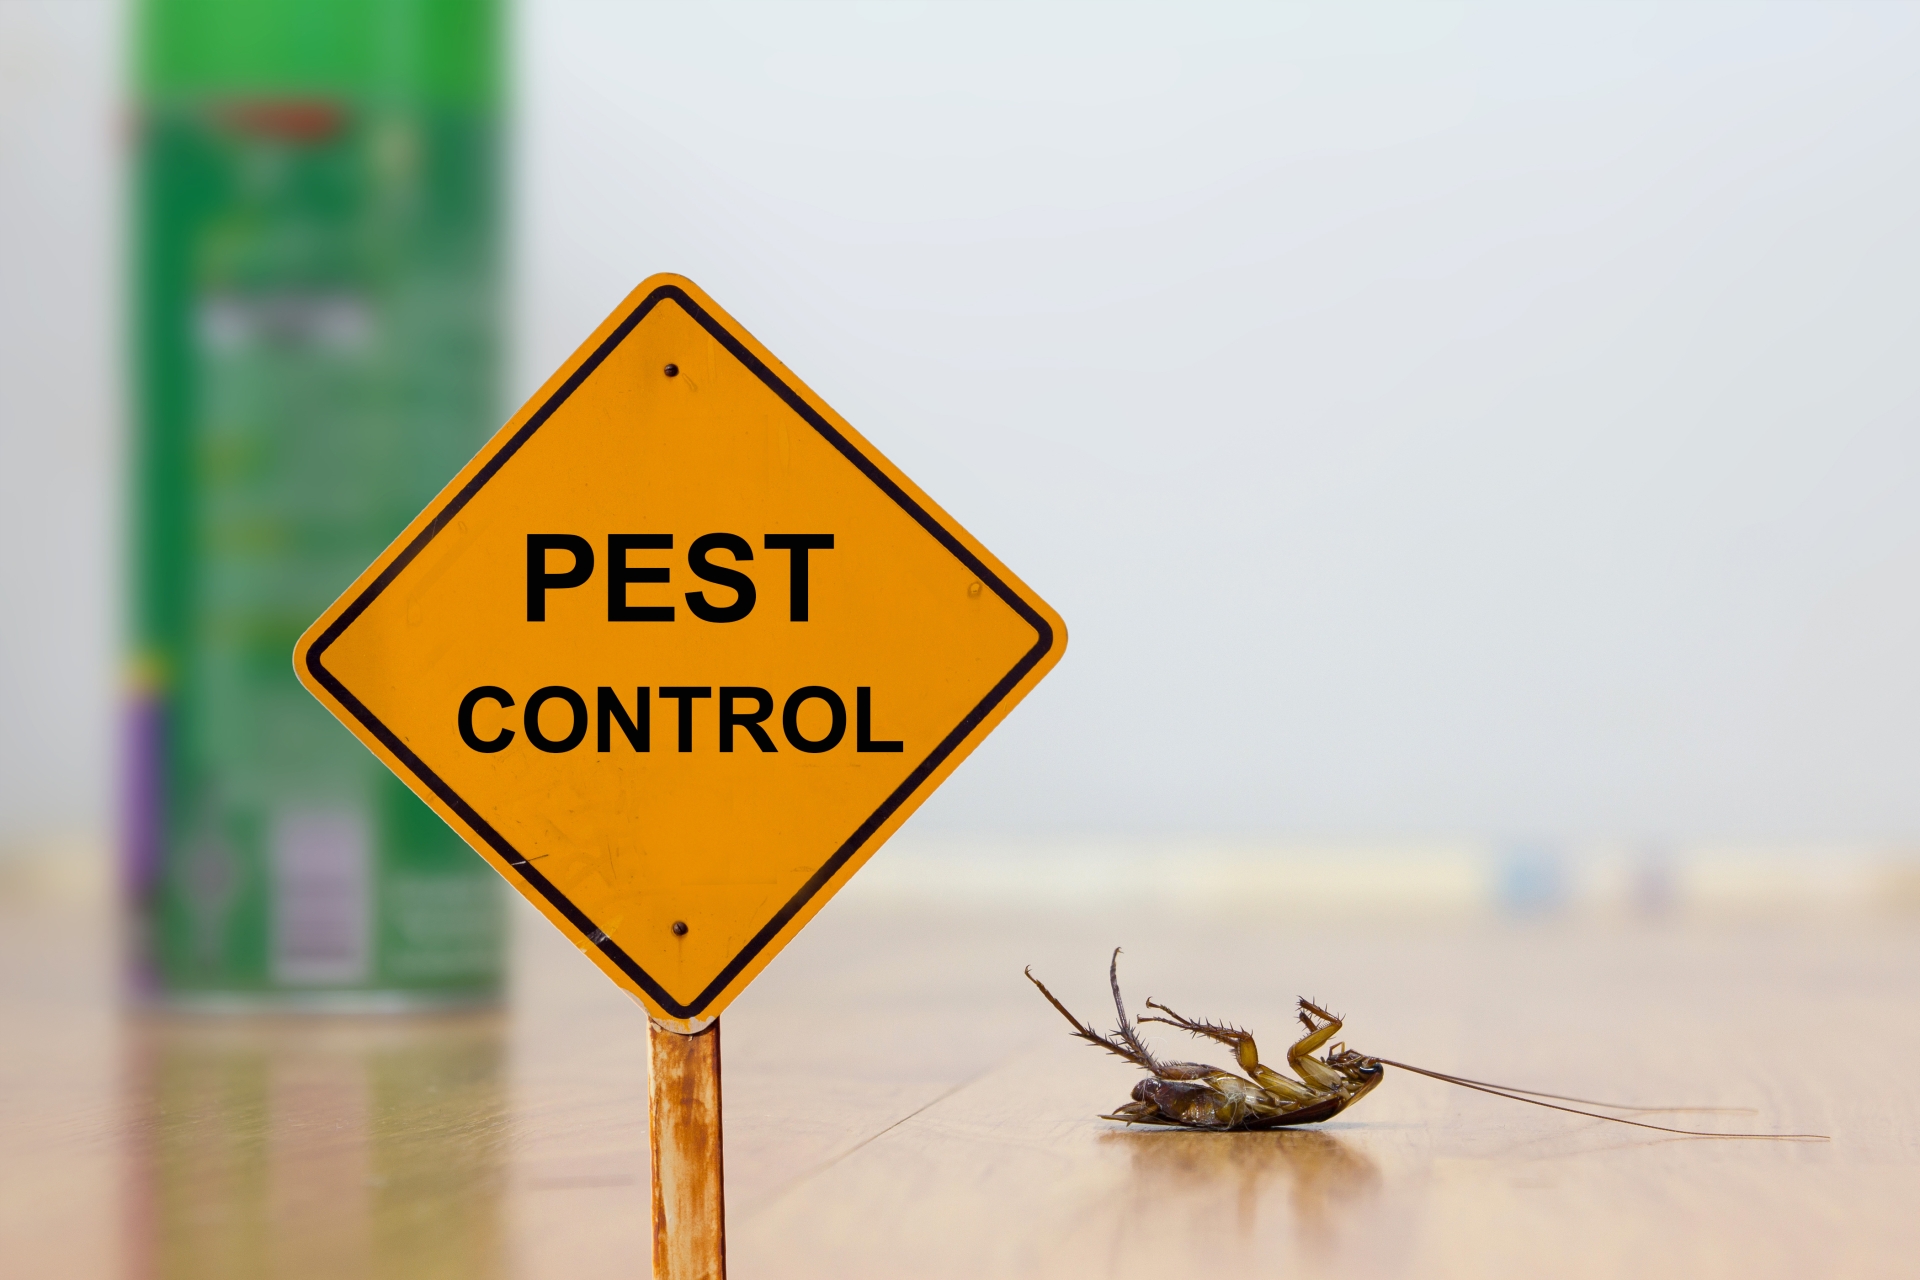 24 Hour Pest Control, Pest Control in Brentford, Kew Bridge, TW8. Call Now 020 8166 9746